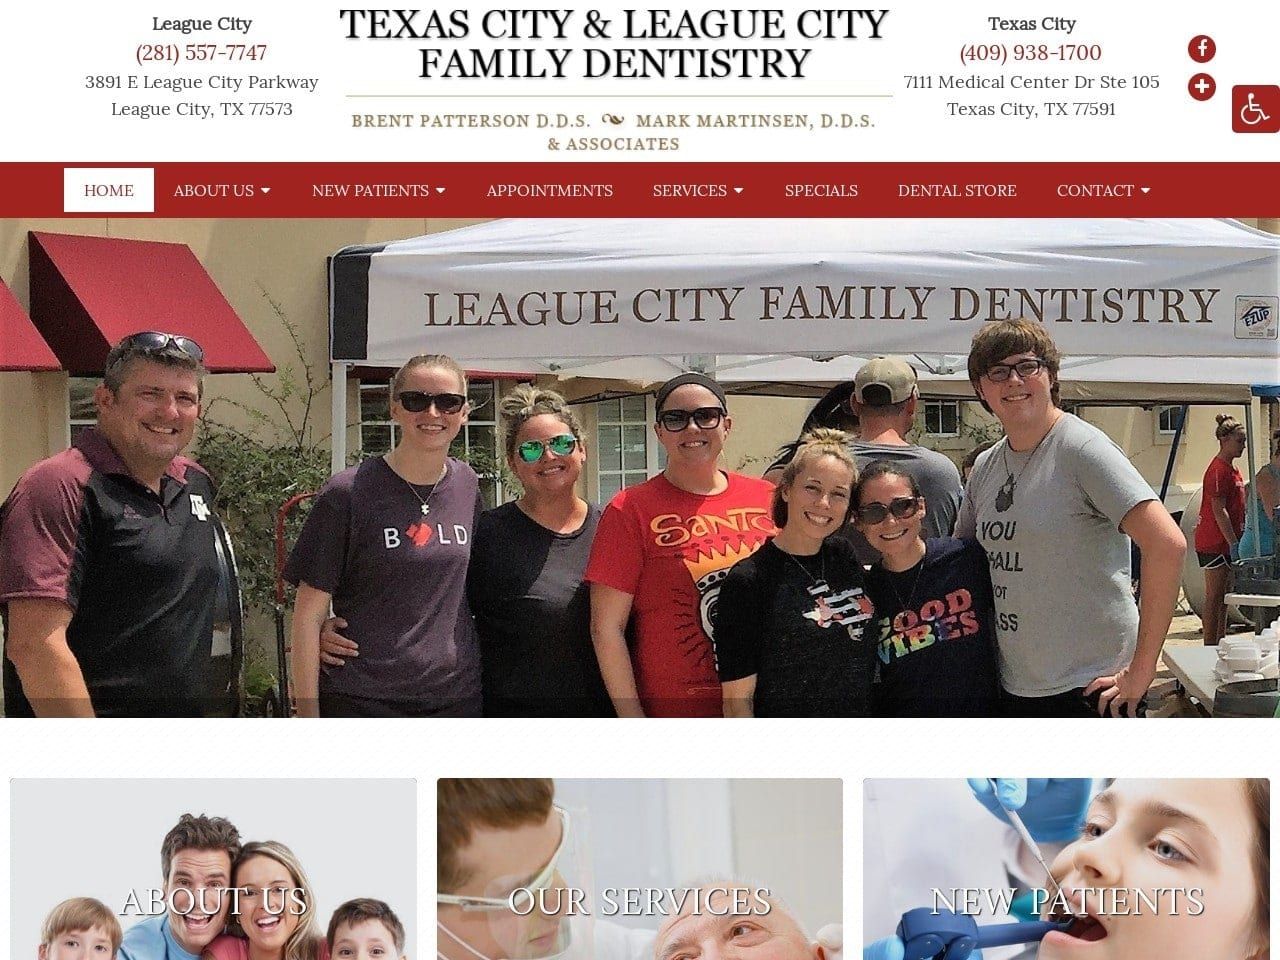 Texas City Family Dentistry Website Screenshot from texascityfamilydentistry.com